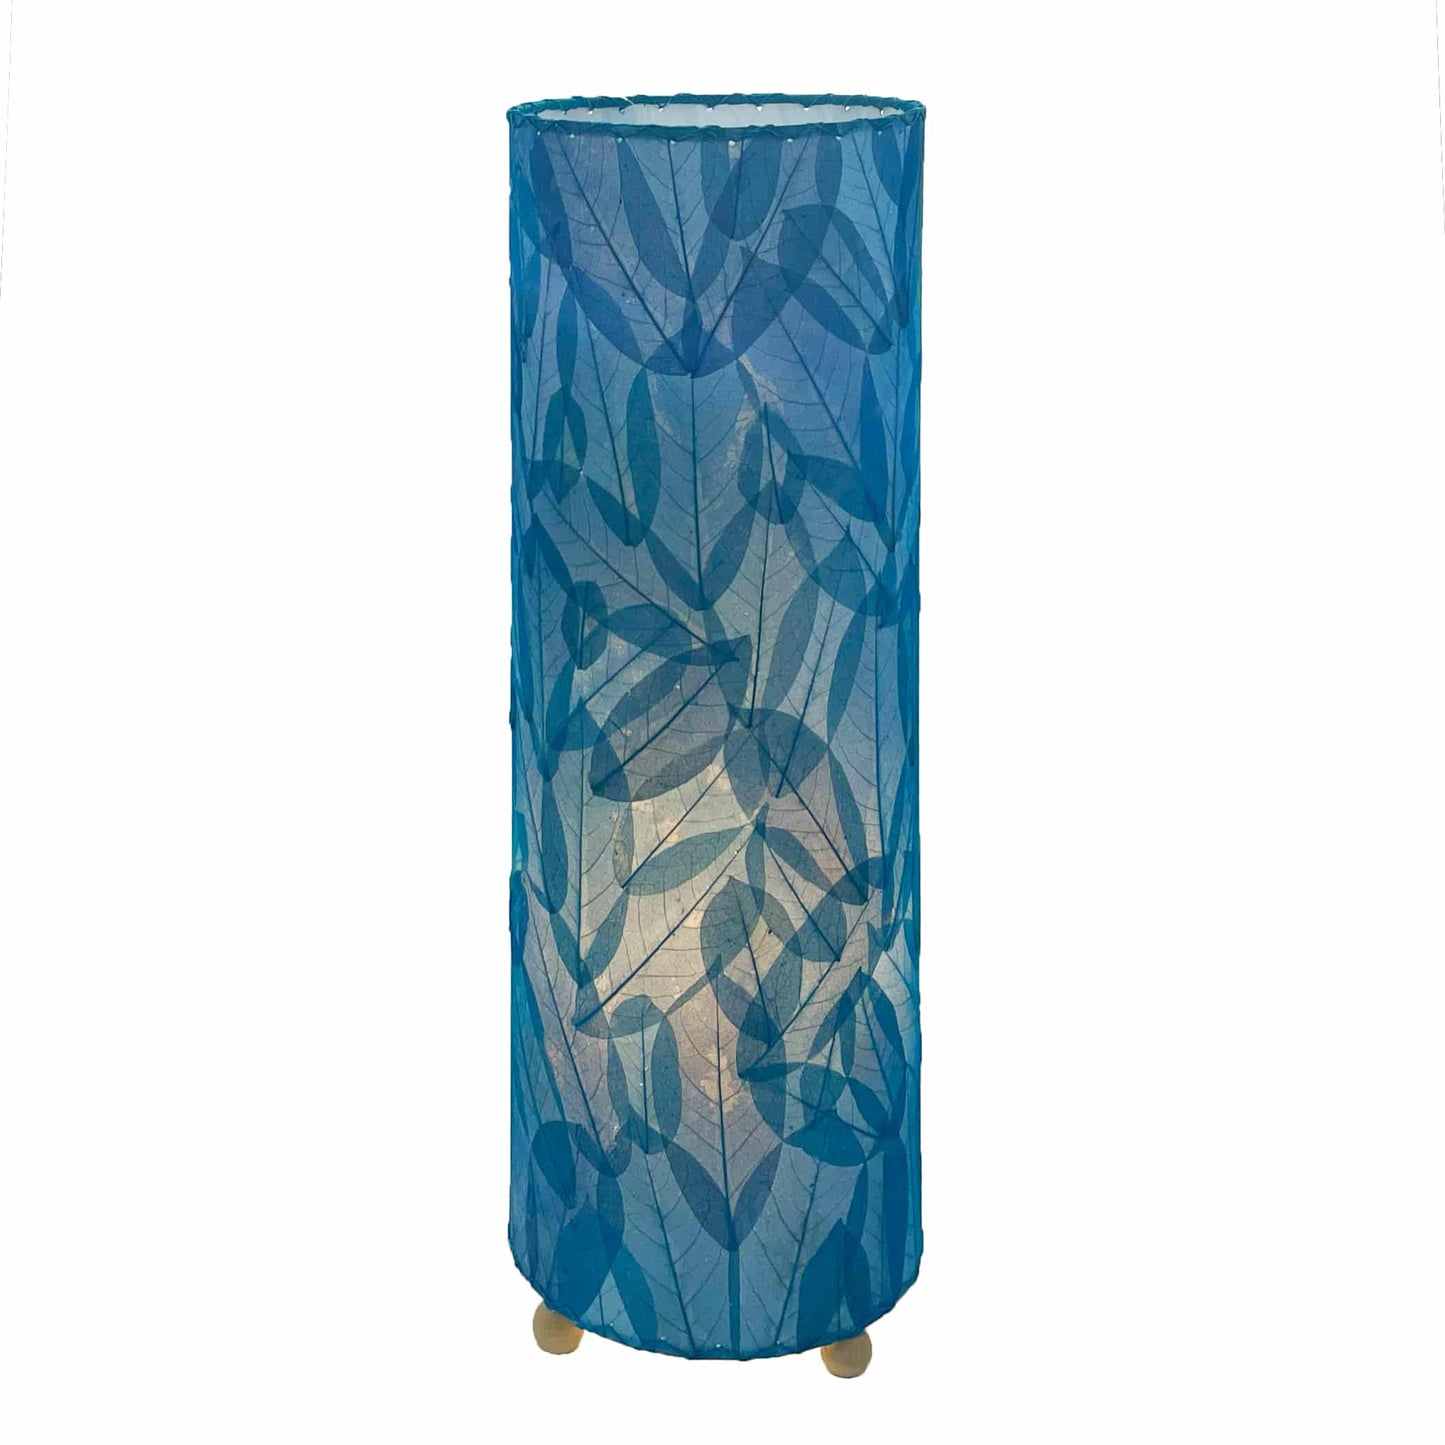 24 Inch Guyabano Leaf Cylinder Table Lamp